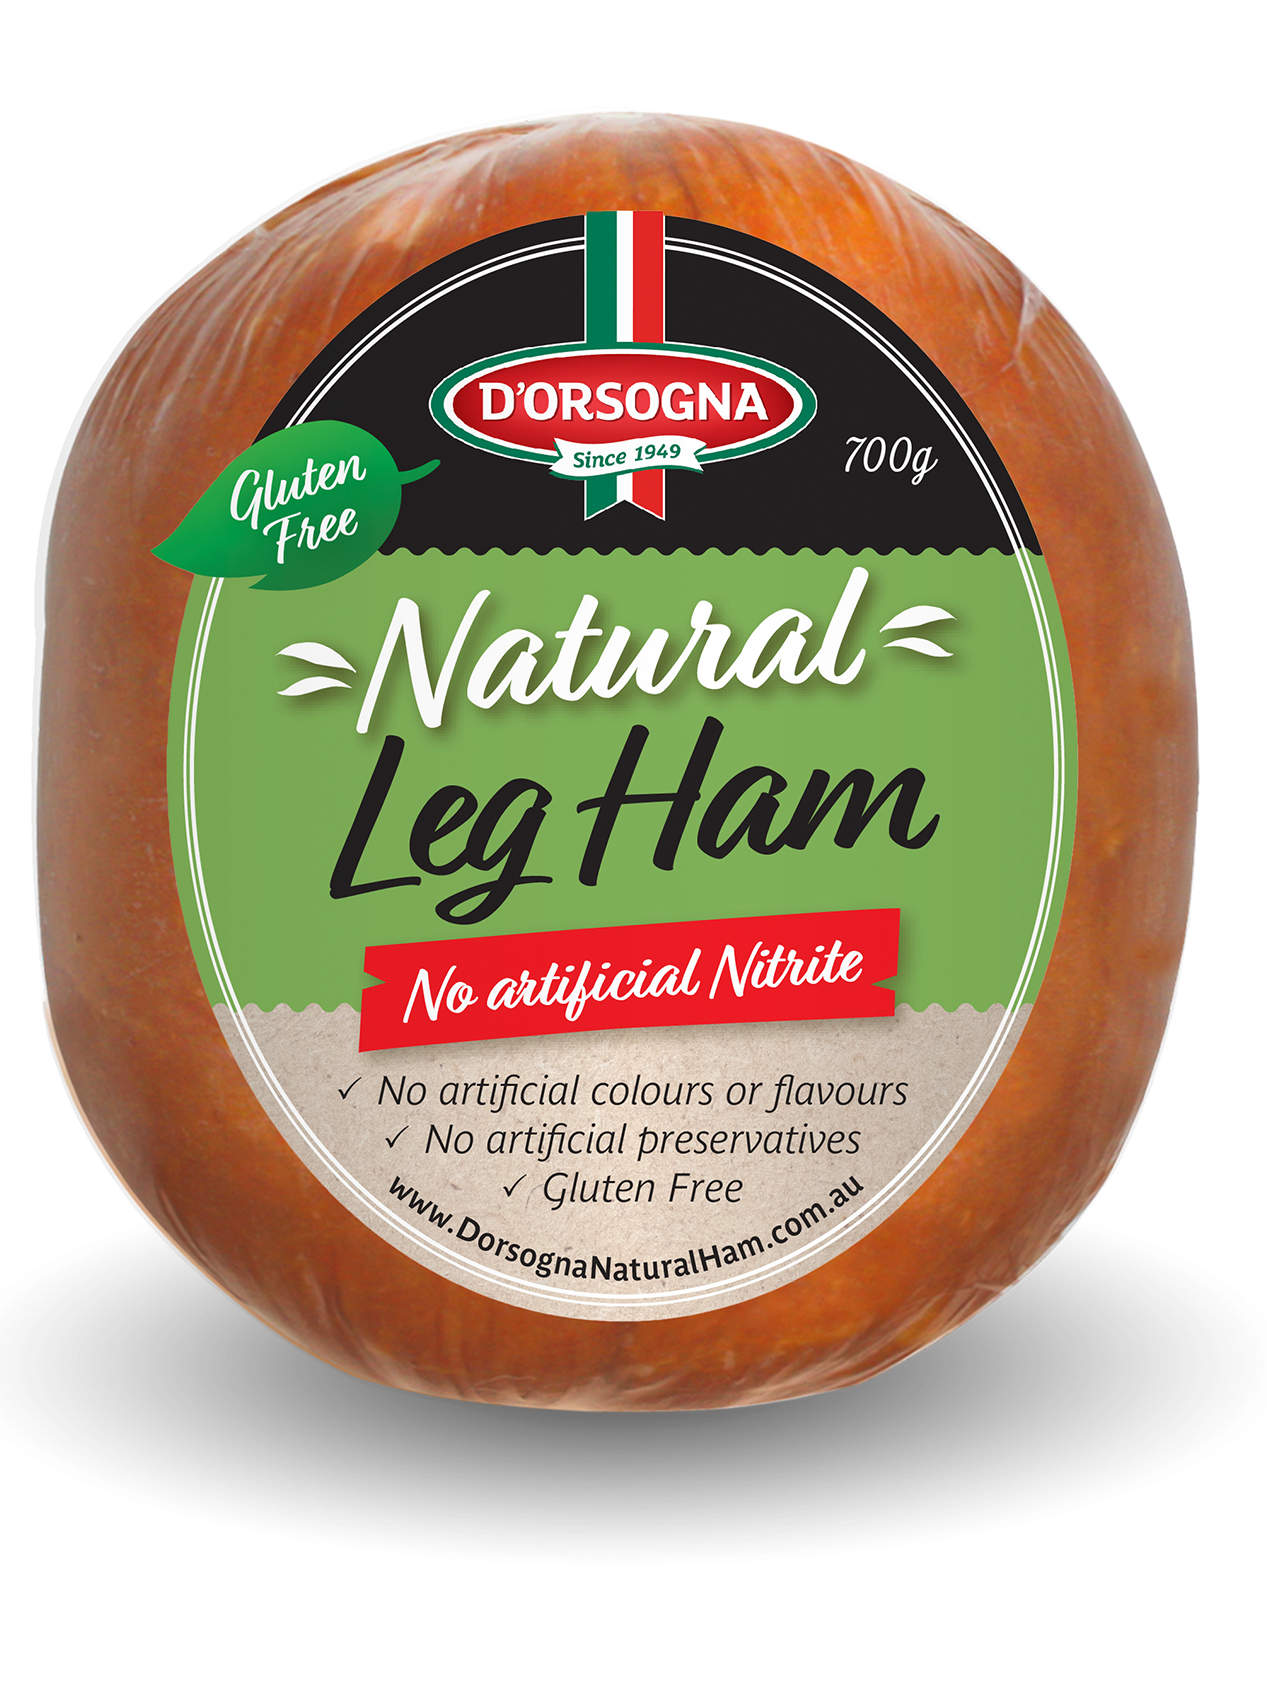 Natural Leg Ham Portion 700g